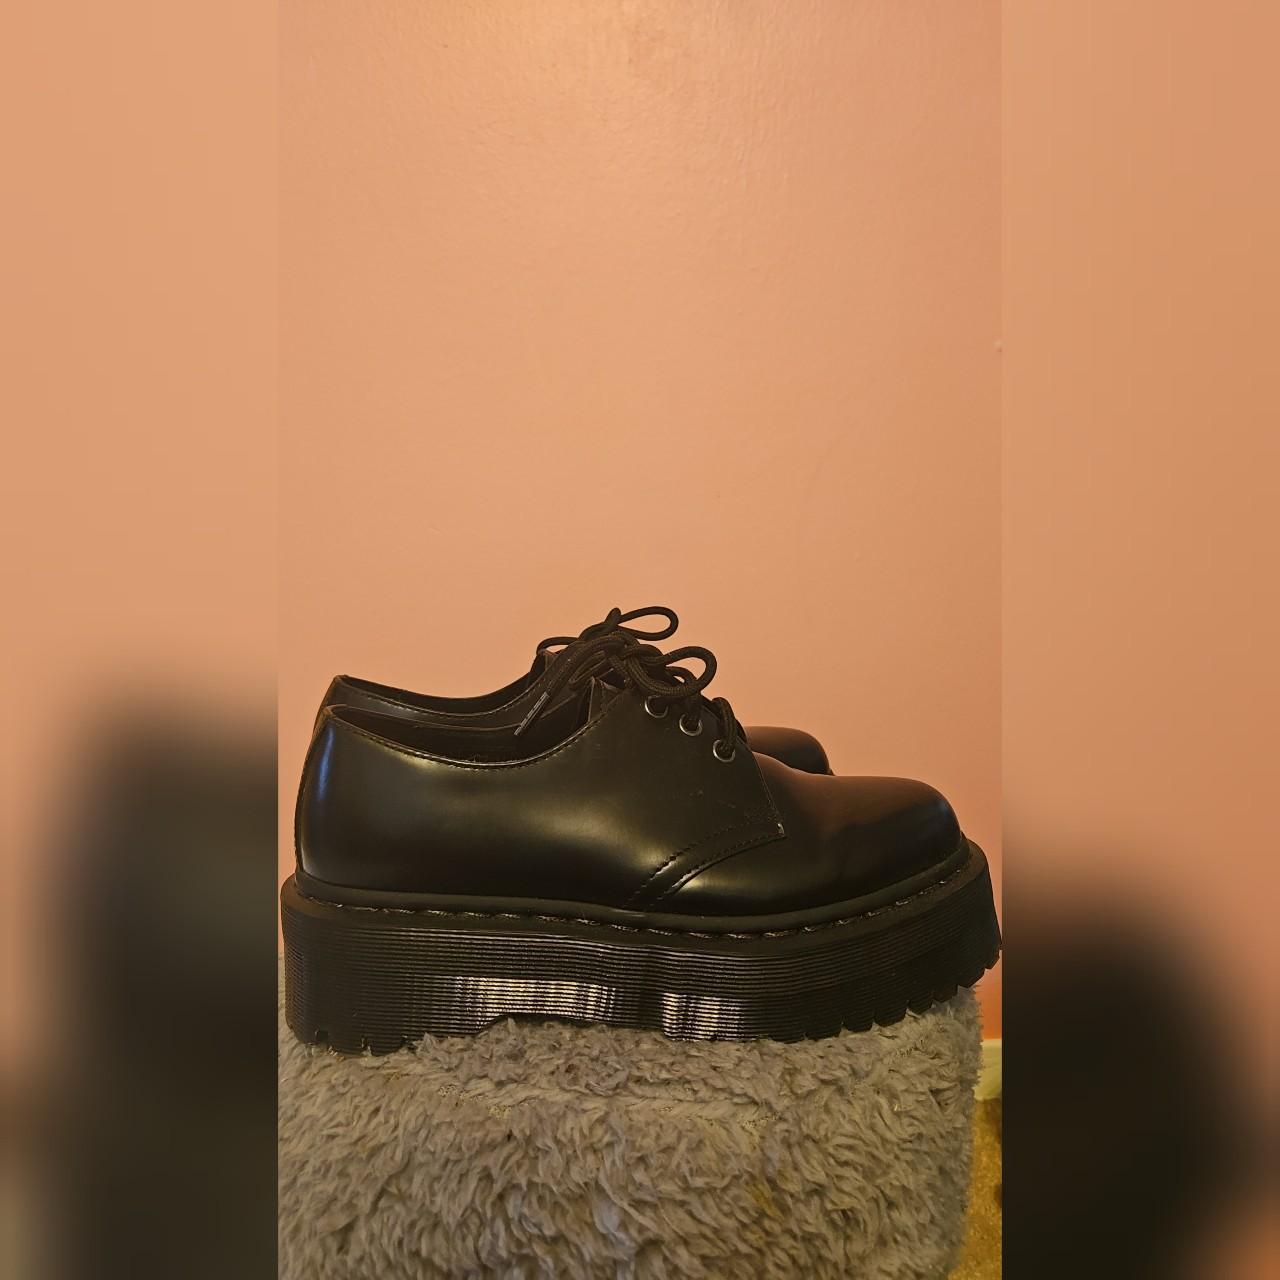 Dr. Martens platform airwair shoes (8053 leather... - Depop